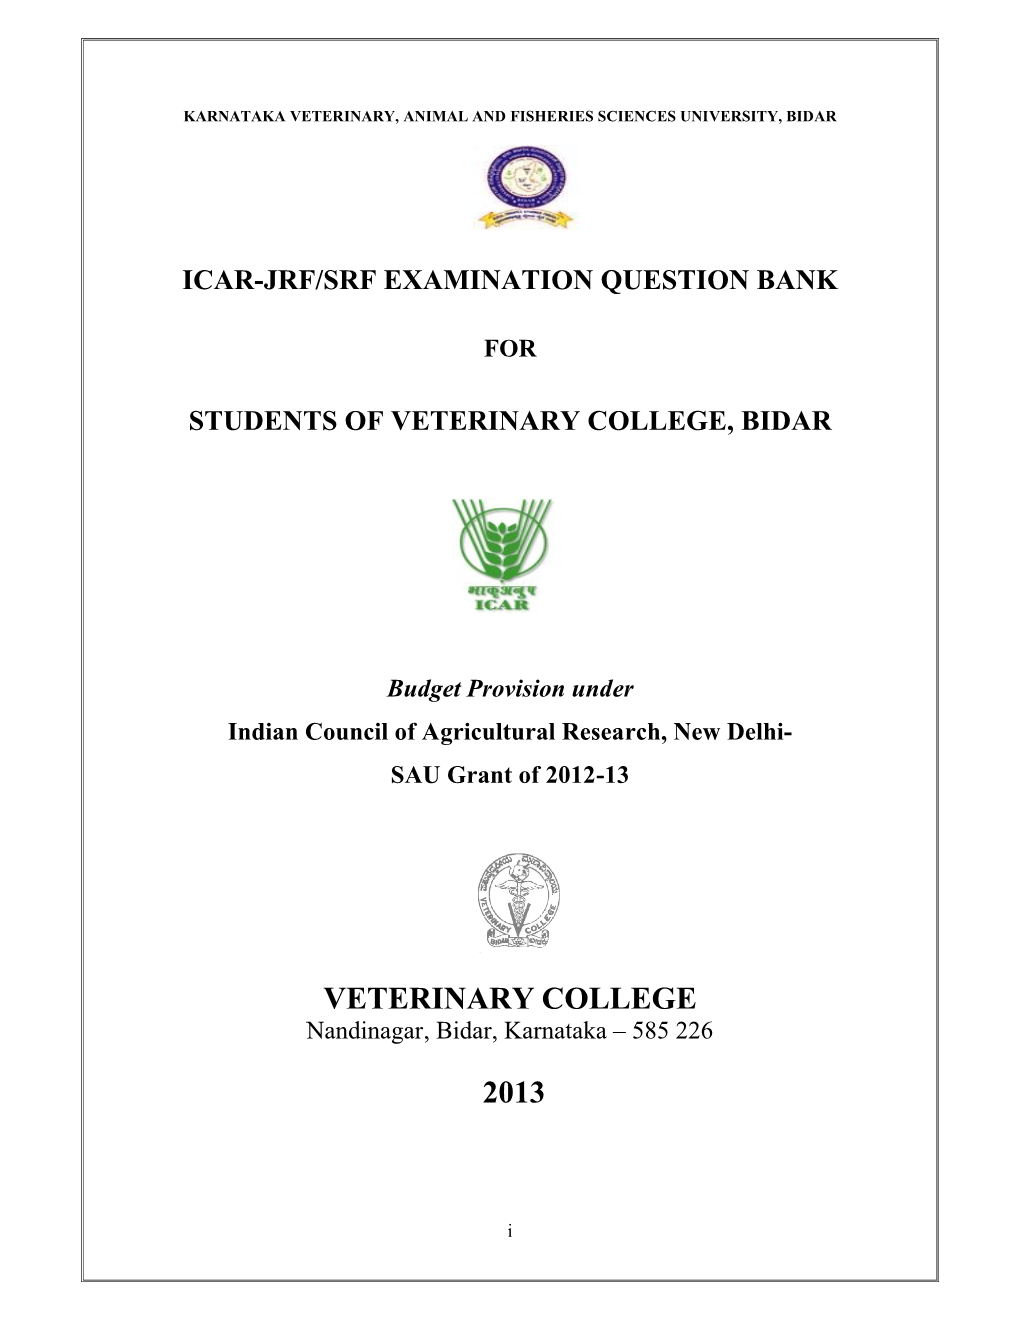 Veterinary College 2013